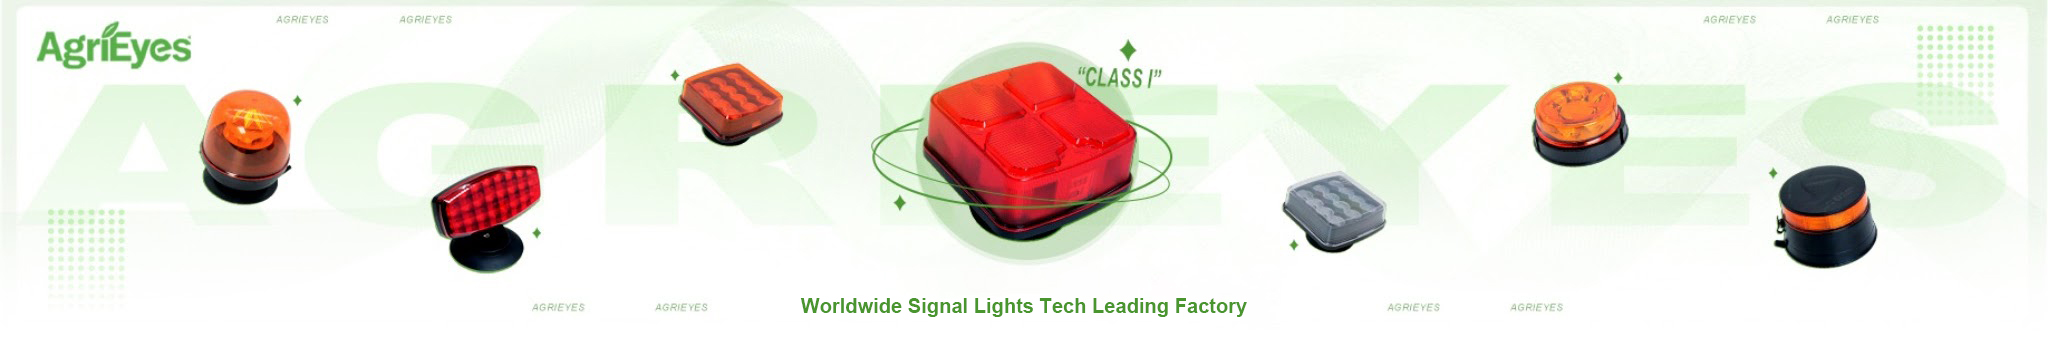 Worldwide Signal Lights Tech Leading Factory